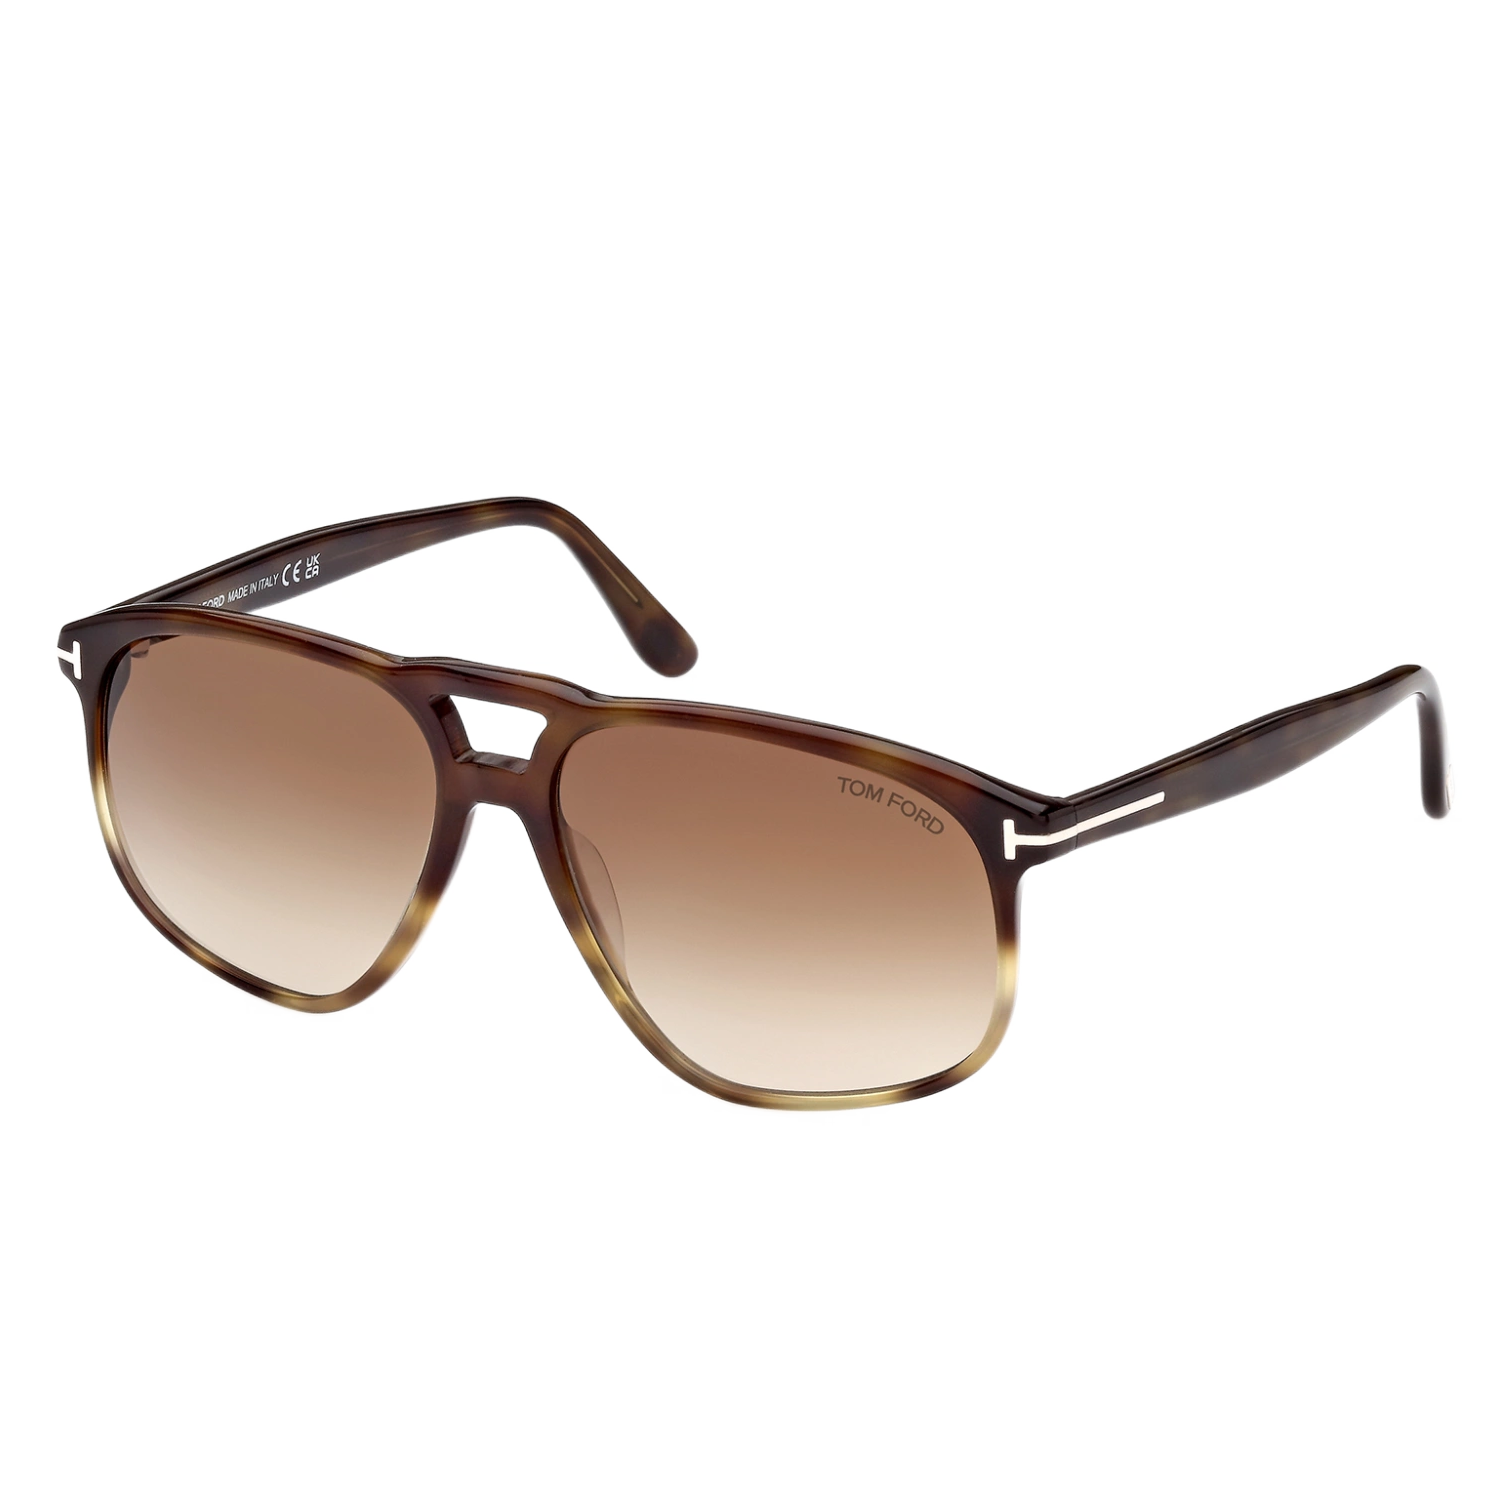 Tom Ford Sunglasses Tom Ford Sunglasses FT1000 56F 58mm Pierre Eyeglasses Eyewear UK USA Australia 